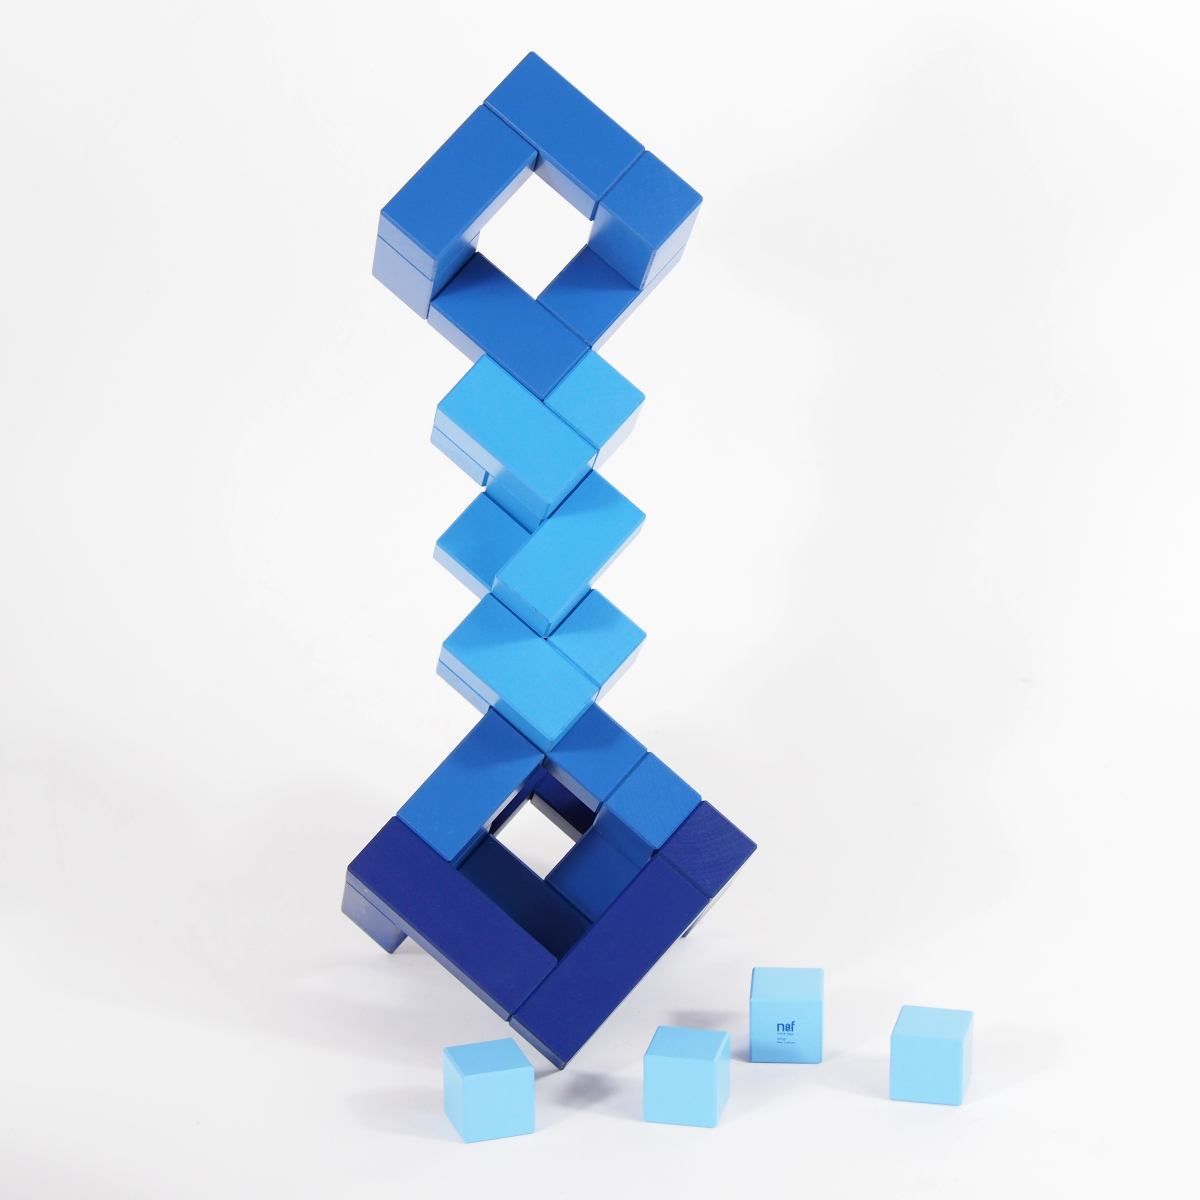 Original Naef Toy "Cubicus" (Blue)